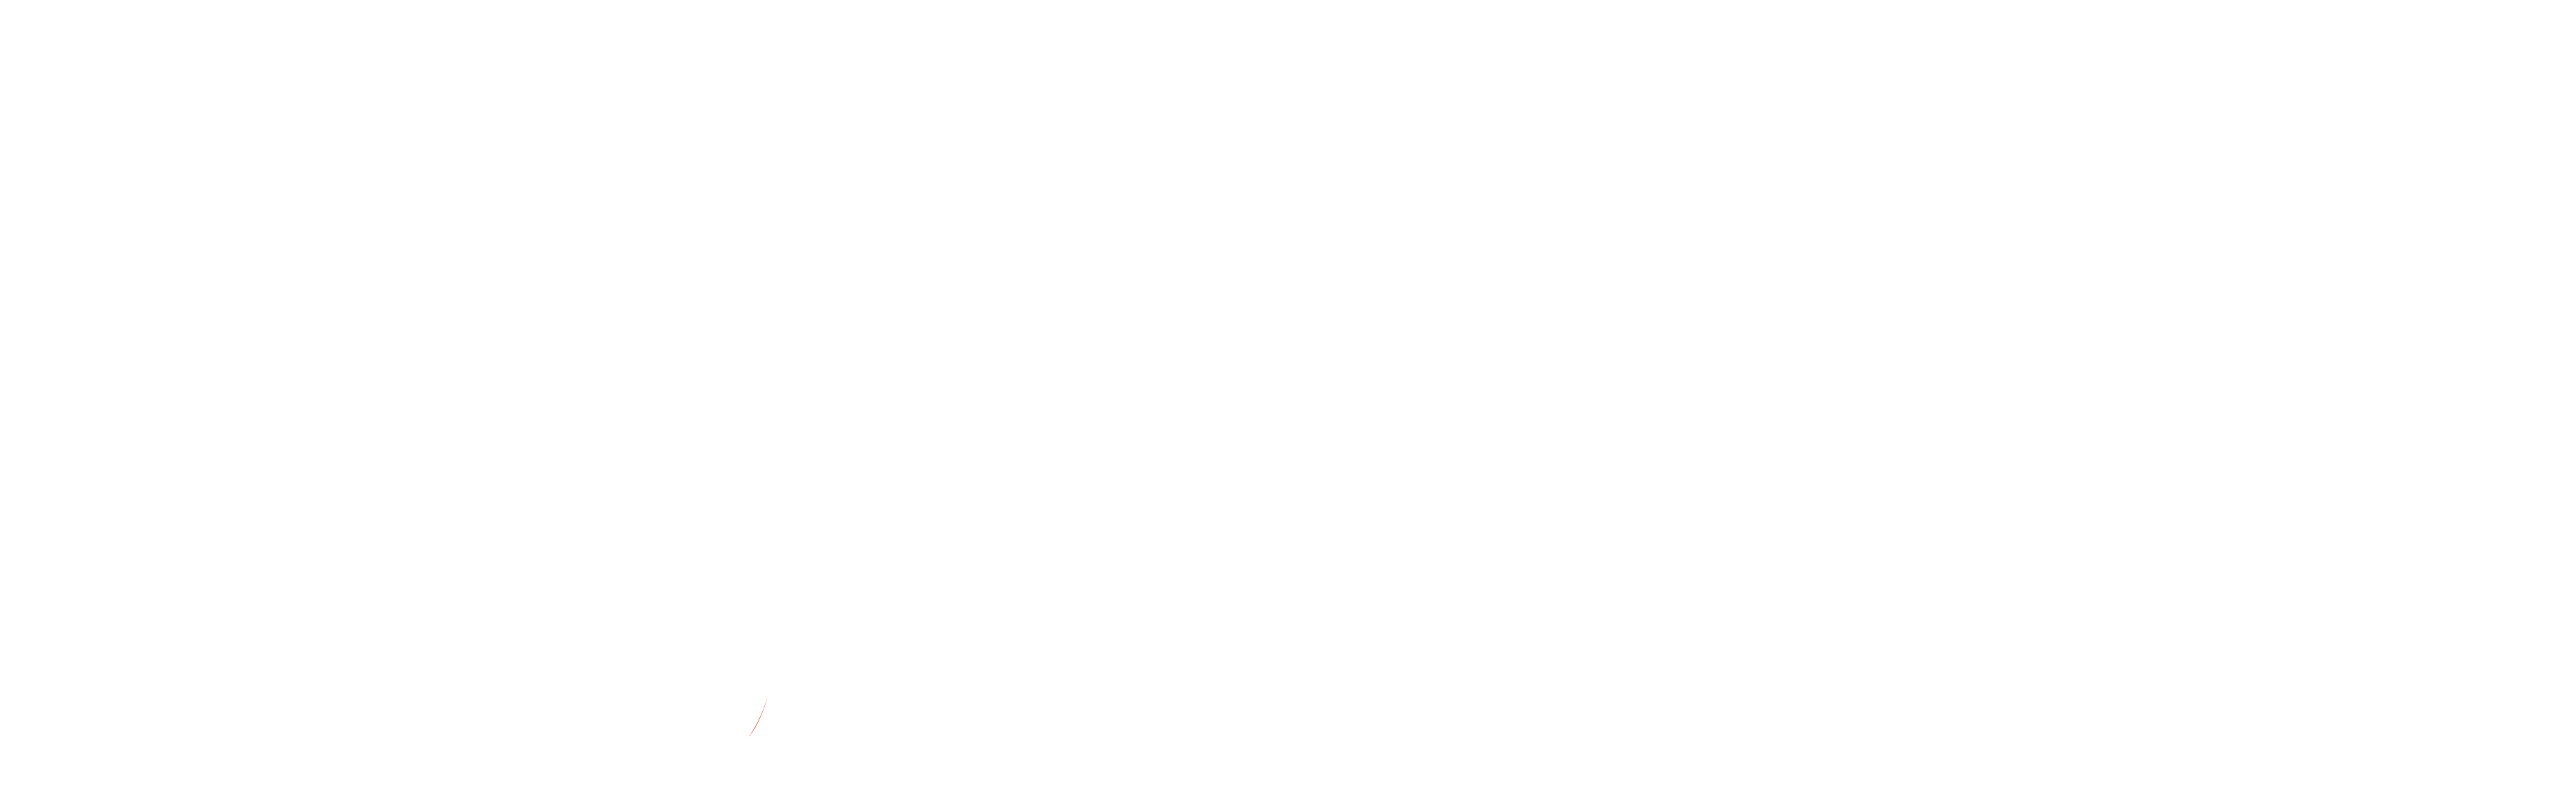 WeTranslate logo white